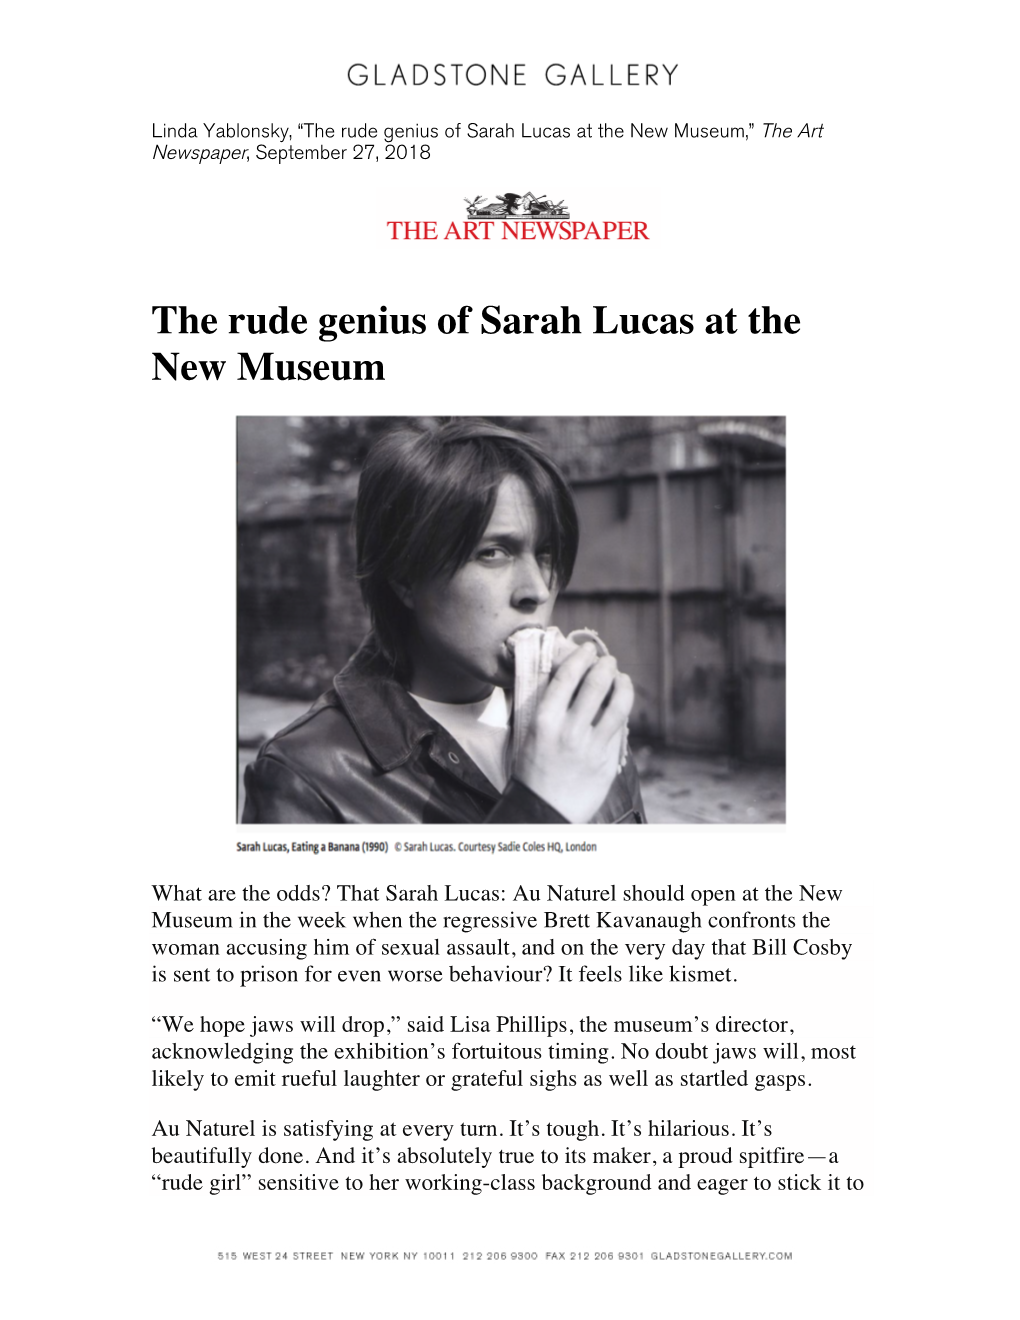 The Rude Genius of Sarah Lucas at the New Museum,” the Art Newspaper, September 27, 2018